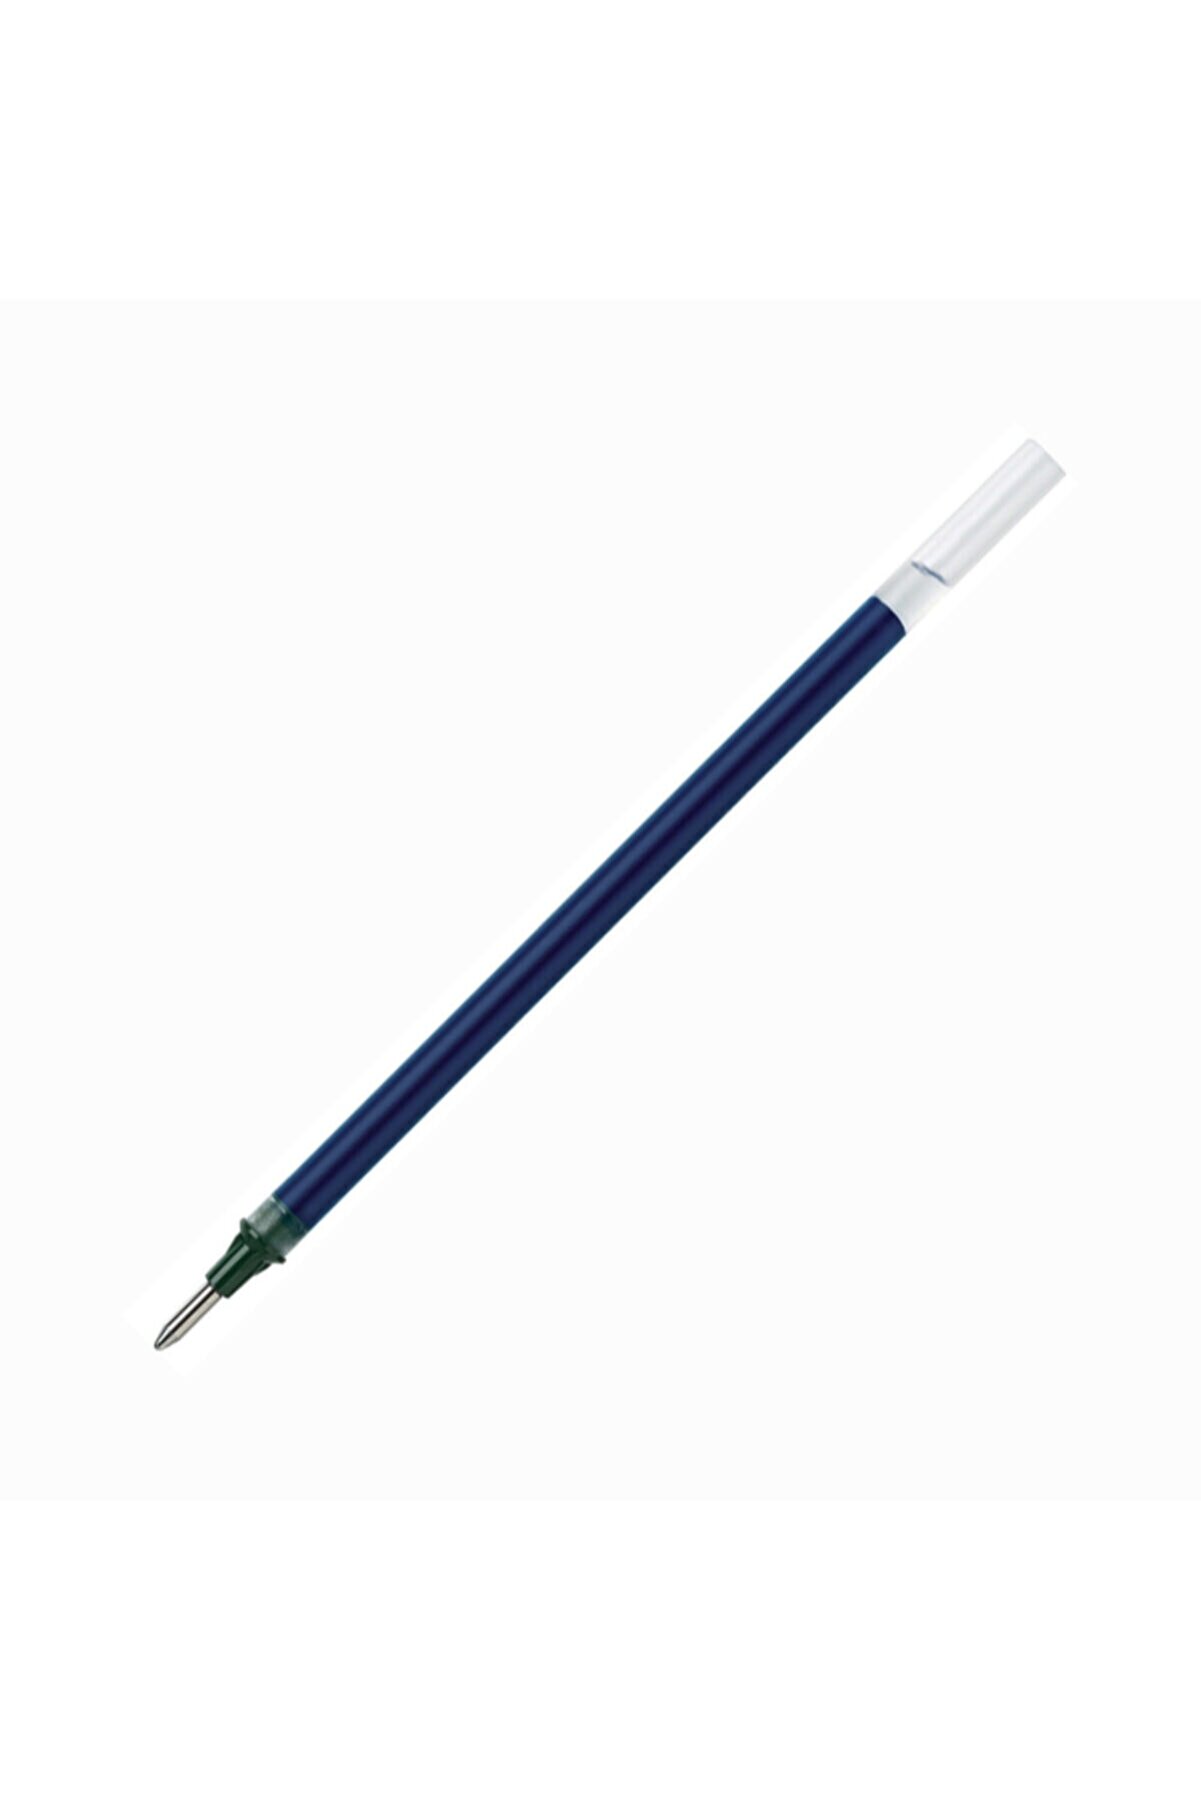 uni-ball Signo Broad Imza Kalemi Yedeği Refil 1.0mm ( Um-153 Için) Mavi Umr-10 (12 Li Paket)